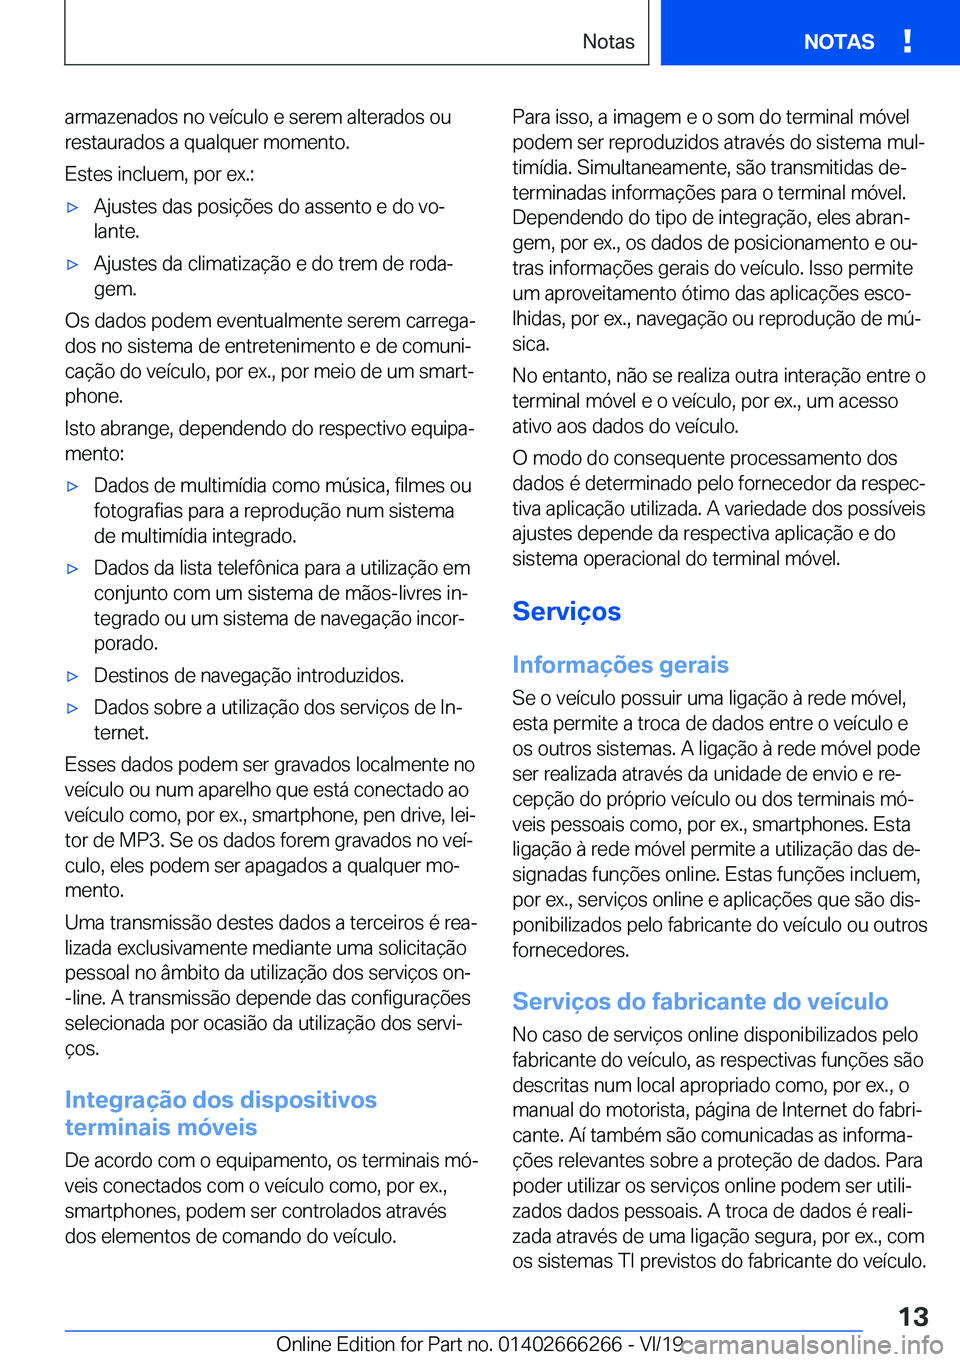 BMW 2 SERIES COUPE 2020  Manual do condutor (in Portuguese) �a�r�m�a�z�e�n�a�d�o�s��n�o��v�e�